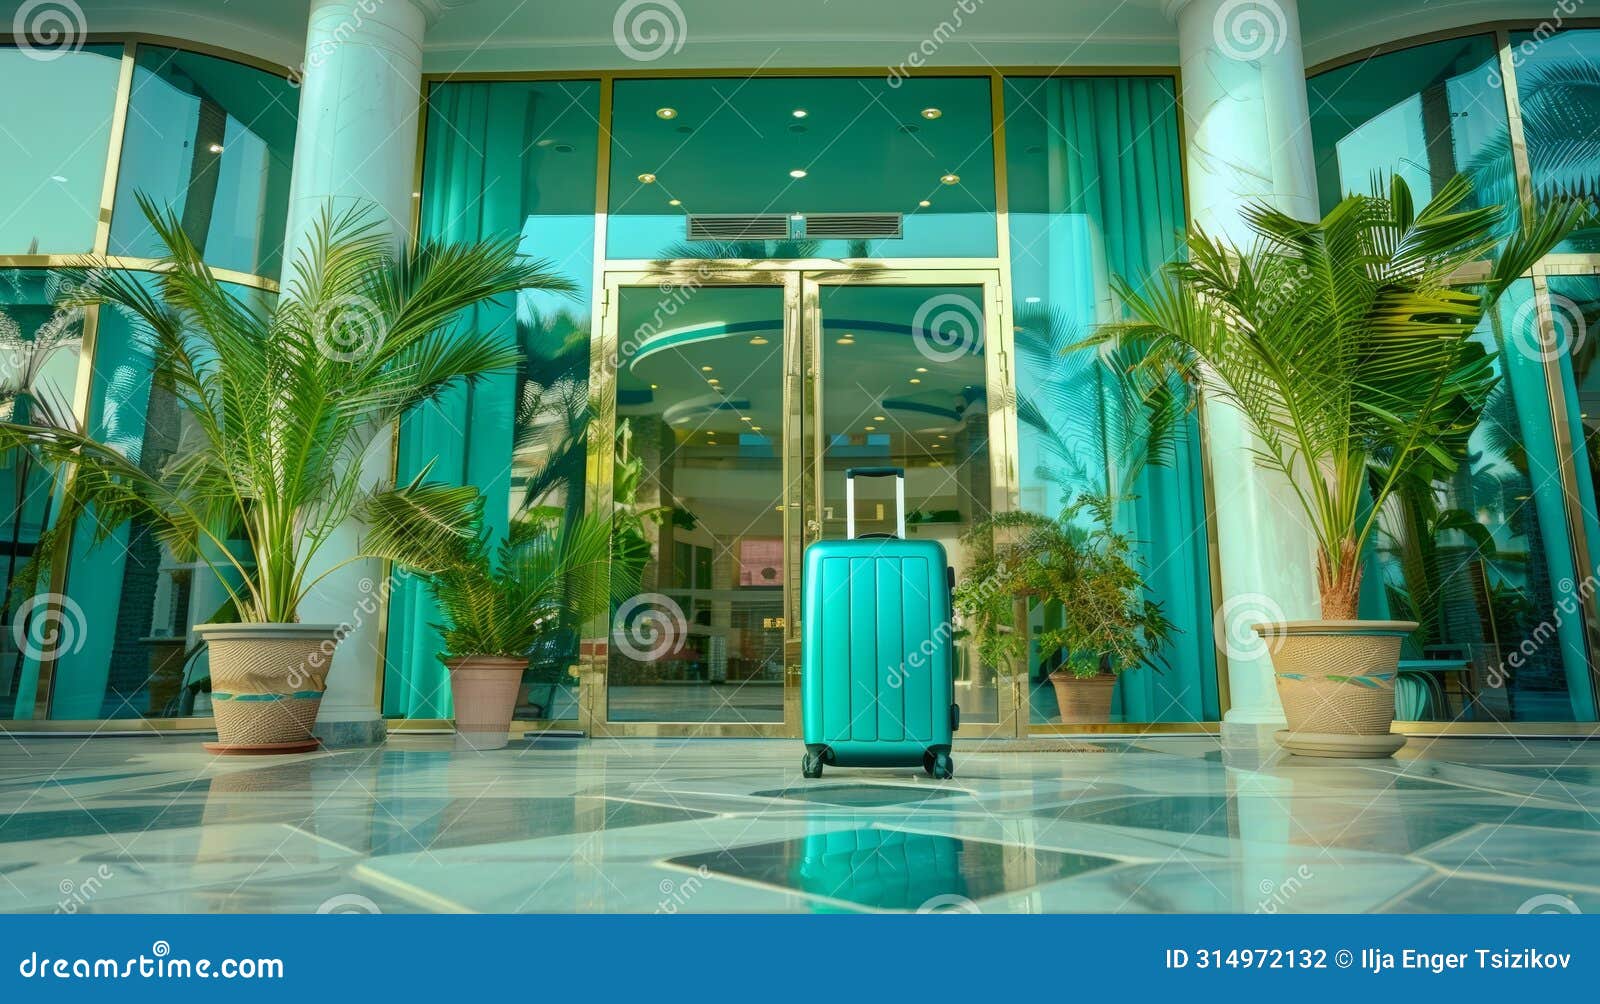 stylish travel suitcase at the entrance of a luxurious and elegant hotel establishment